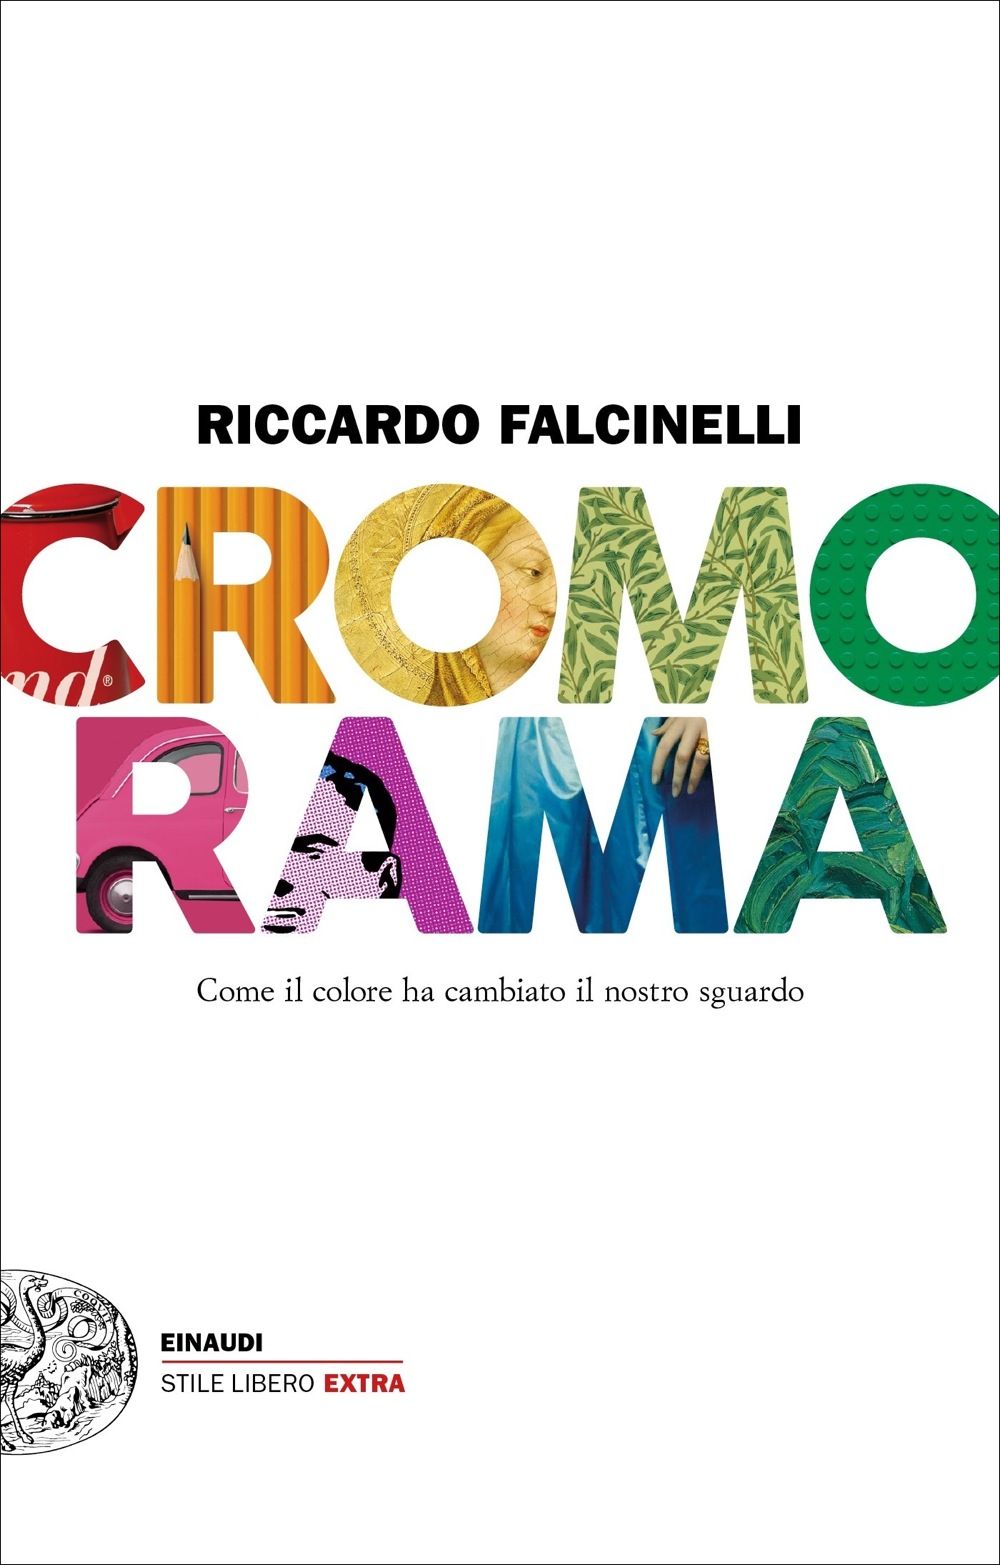 Cromorama, Riccardo Falcinelli. Giulio Einaudi editore - Stile